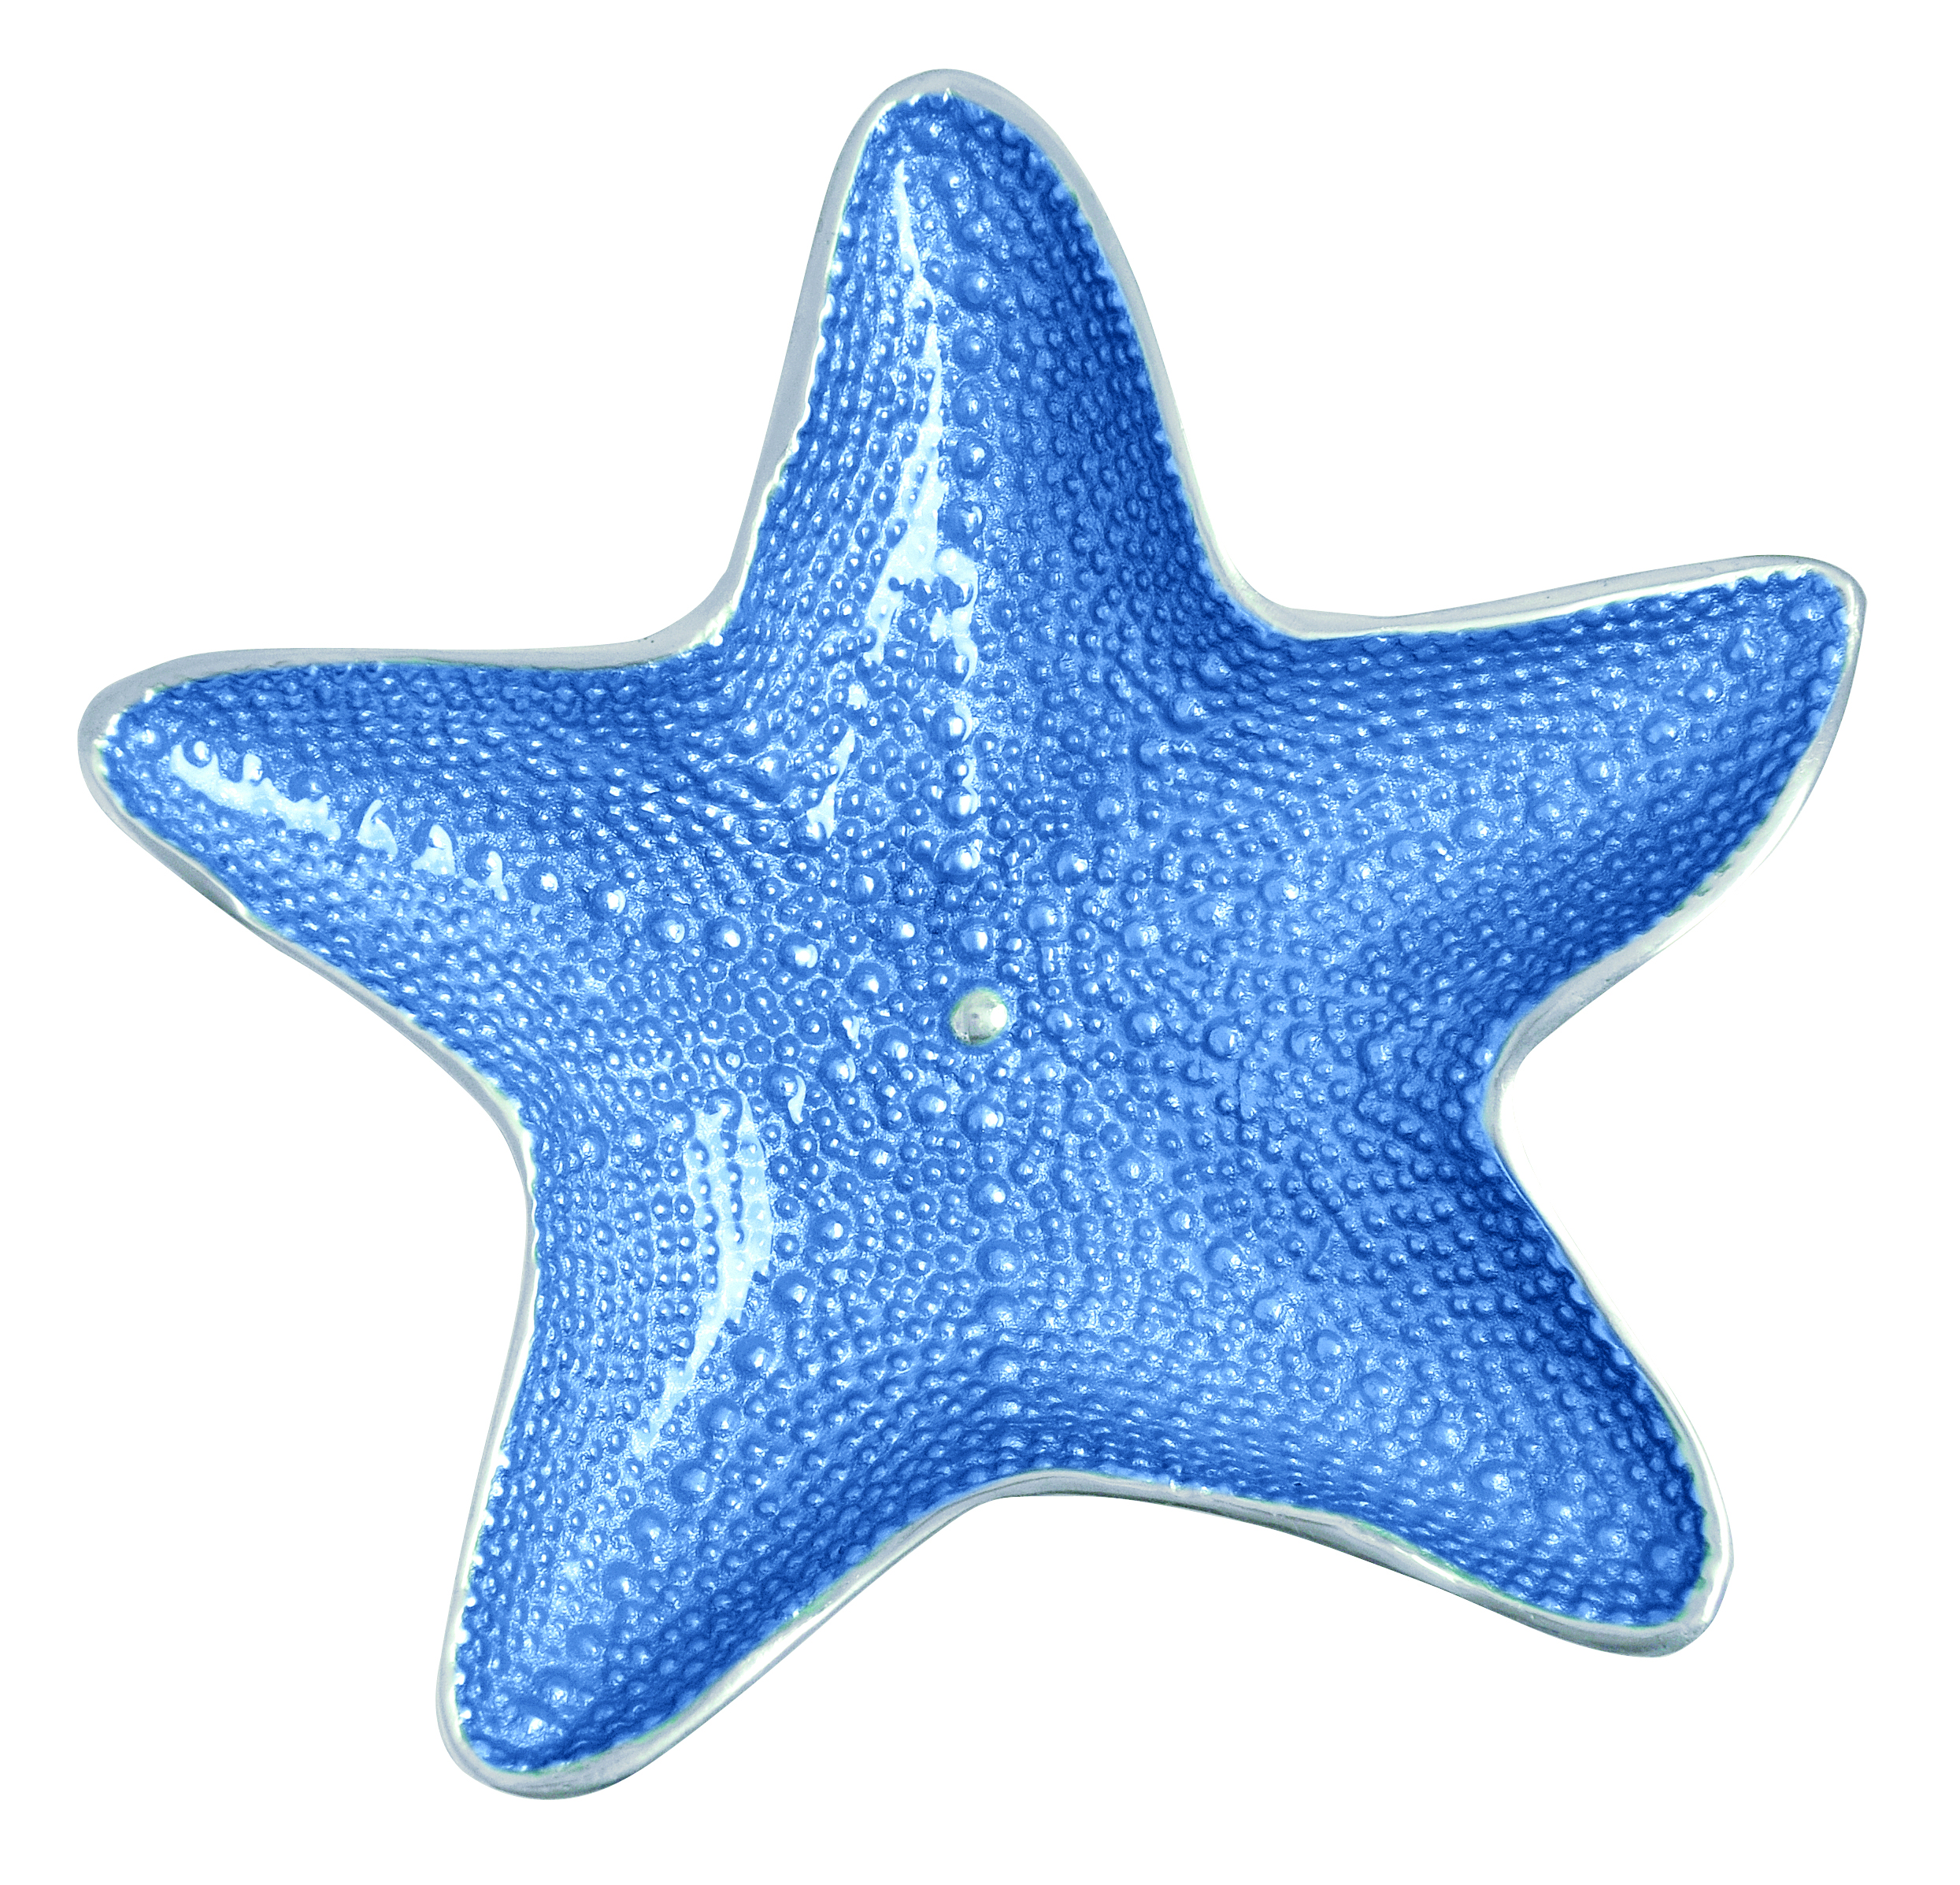 Starfish clip art at vector clip art 2 image 3